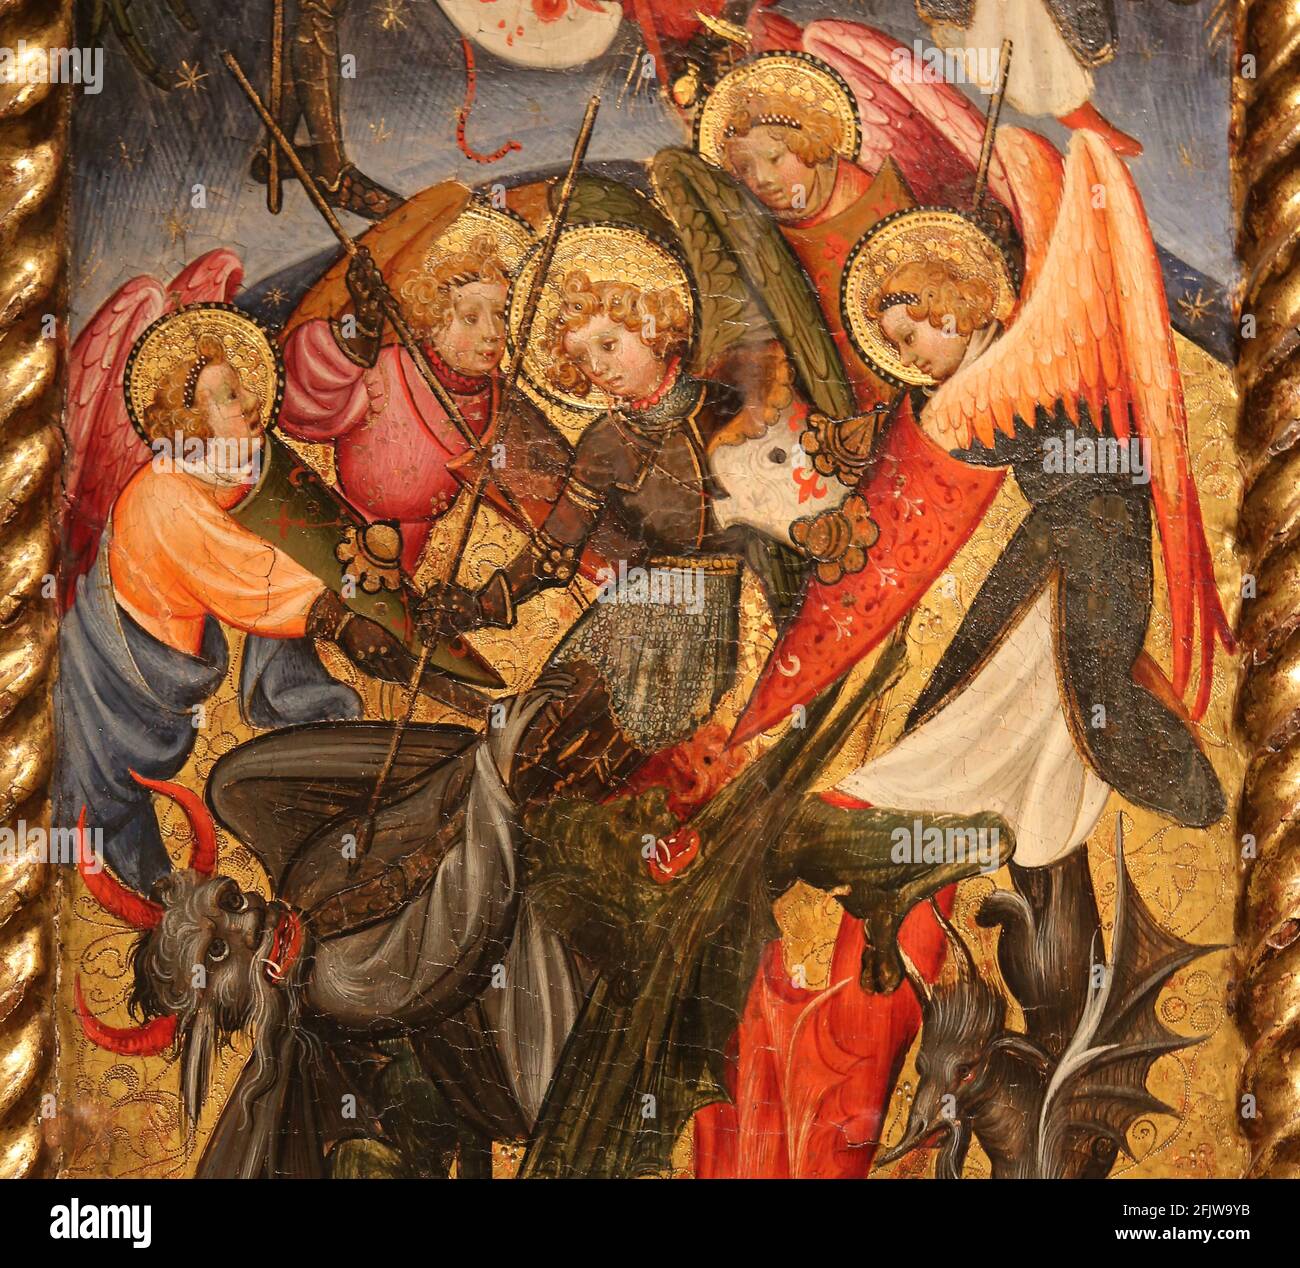 Altarbild des Erzengels Michael. Joan Mates (1370-1431). Tempera auf Holz. Santa Margarita i els Monjos. Nationales Kunstmuseum von Katalonien. Barc Stockfoto